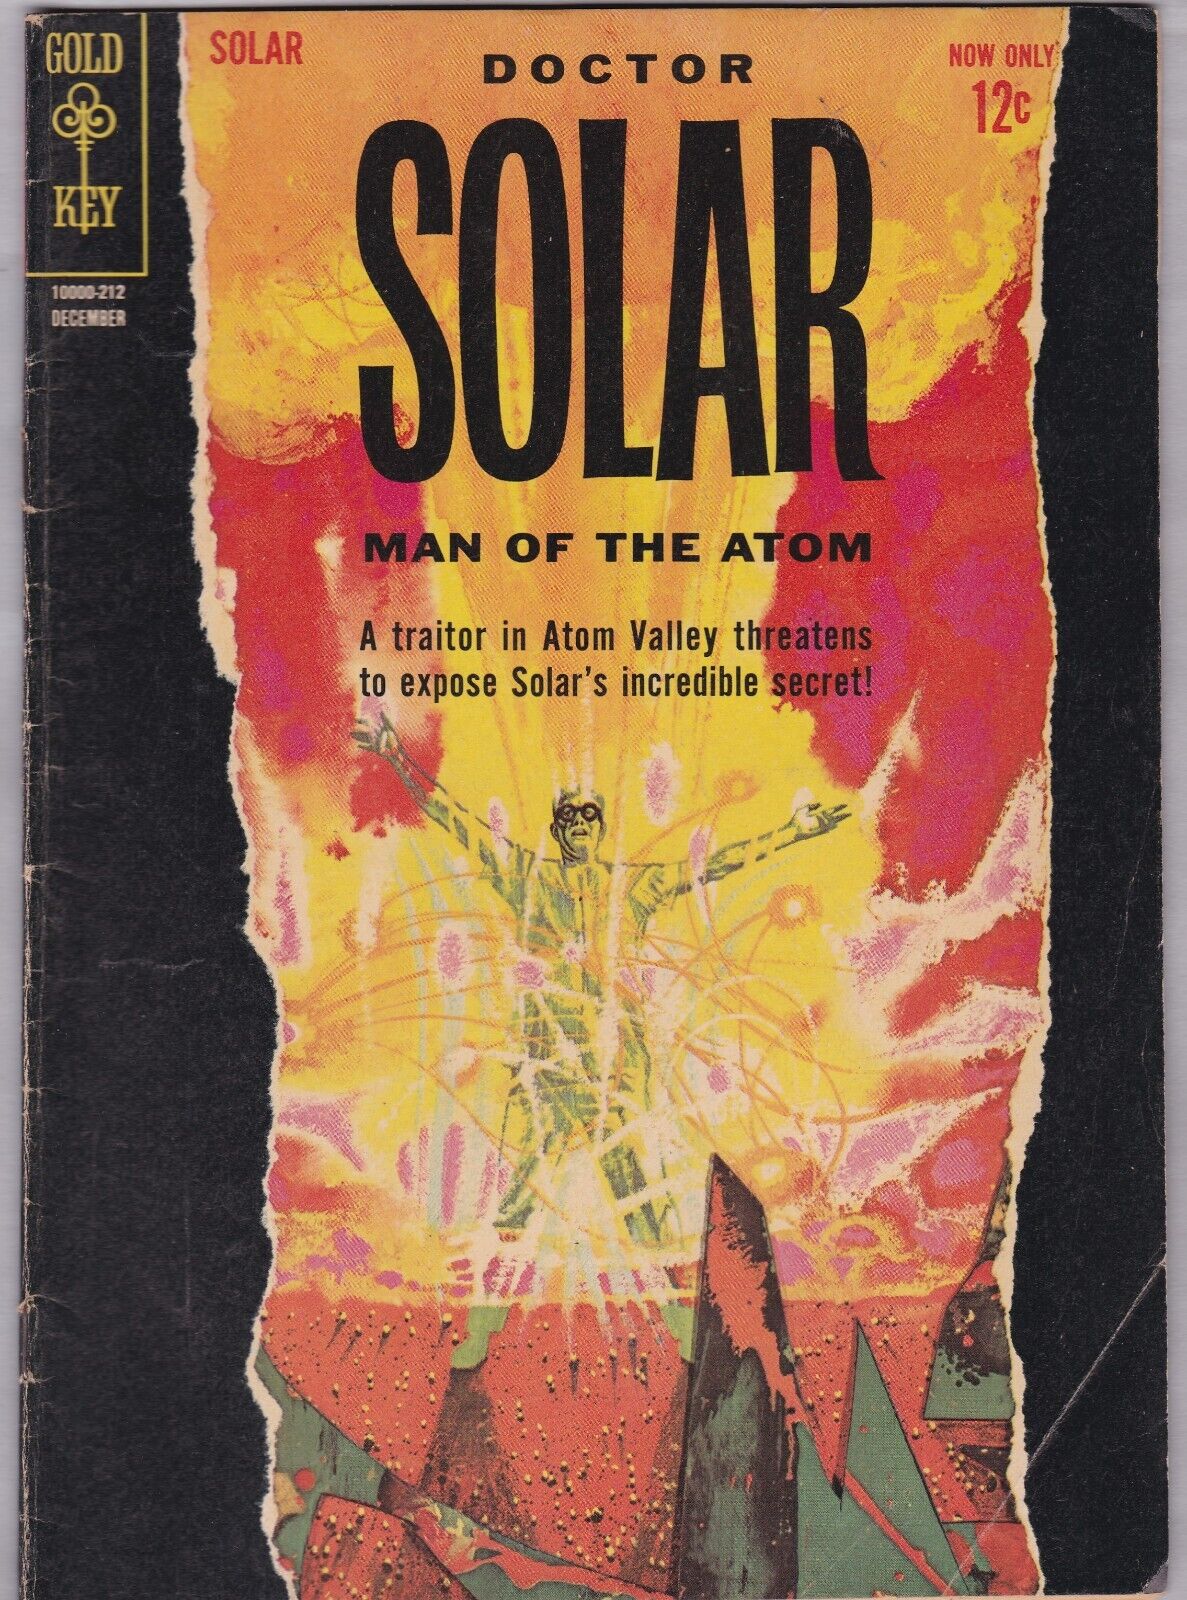 Doctor Solar Man Of The Atom #2 (Gold Key, Dec 1962)